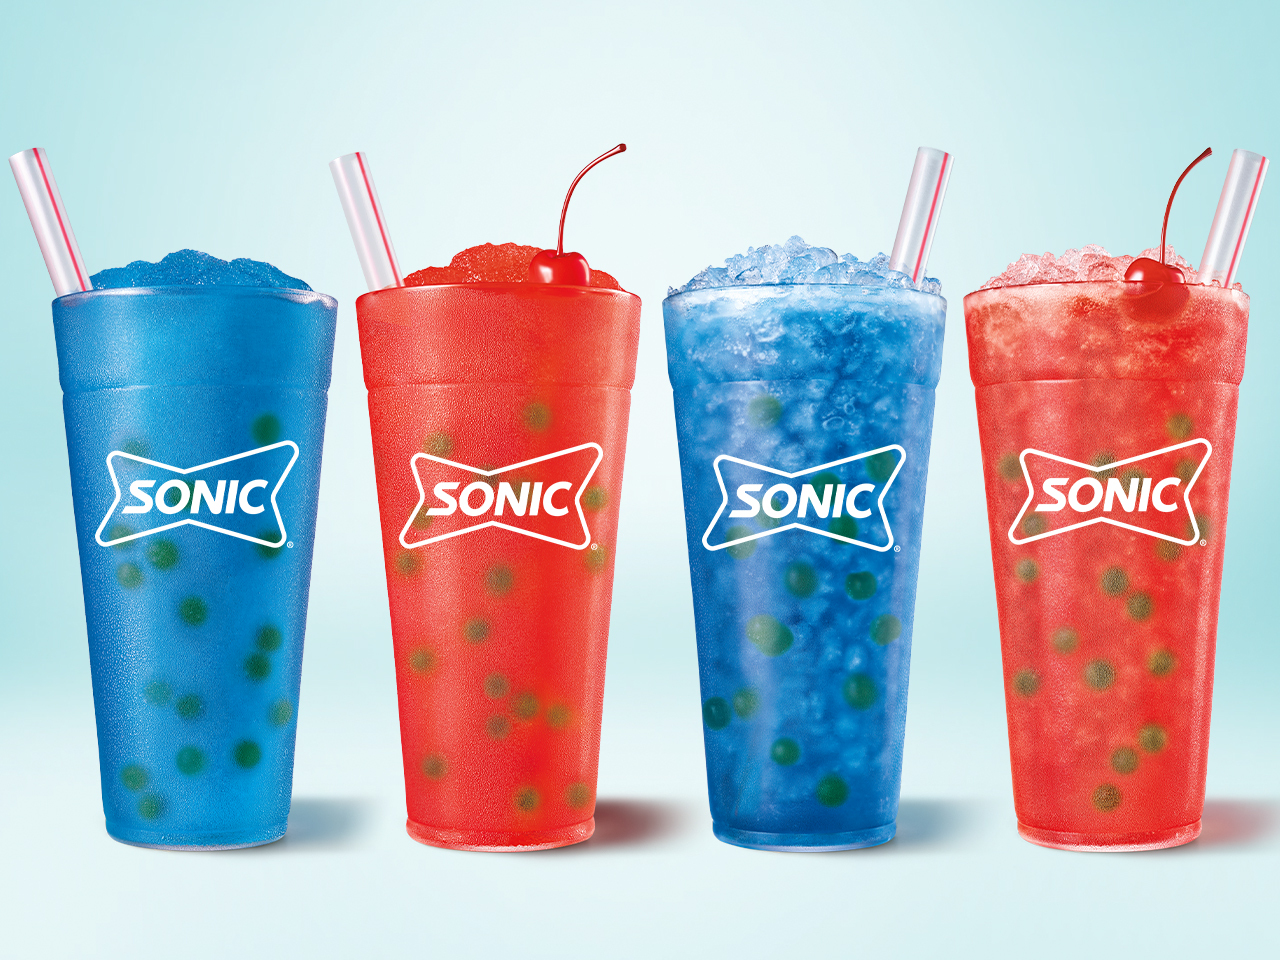 Sonic Drinks